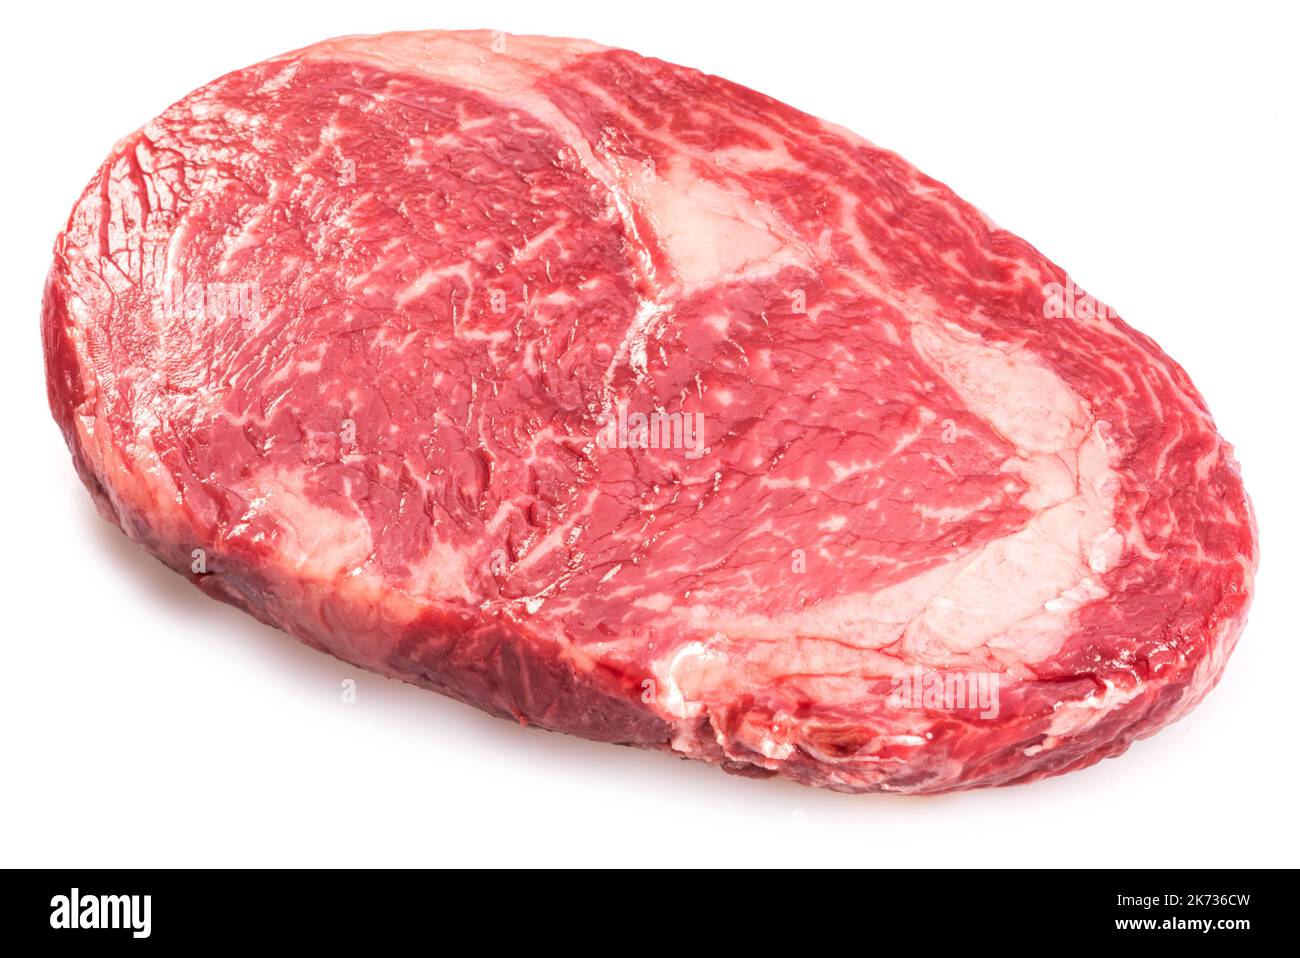 Raw ribeye steak isolated on white background. Top view. Stock Photo